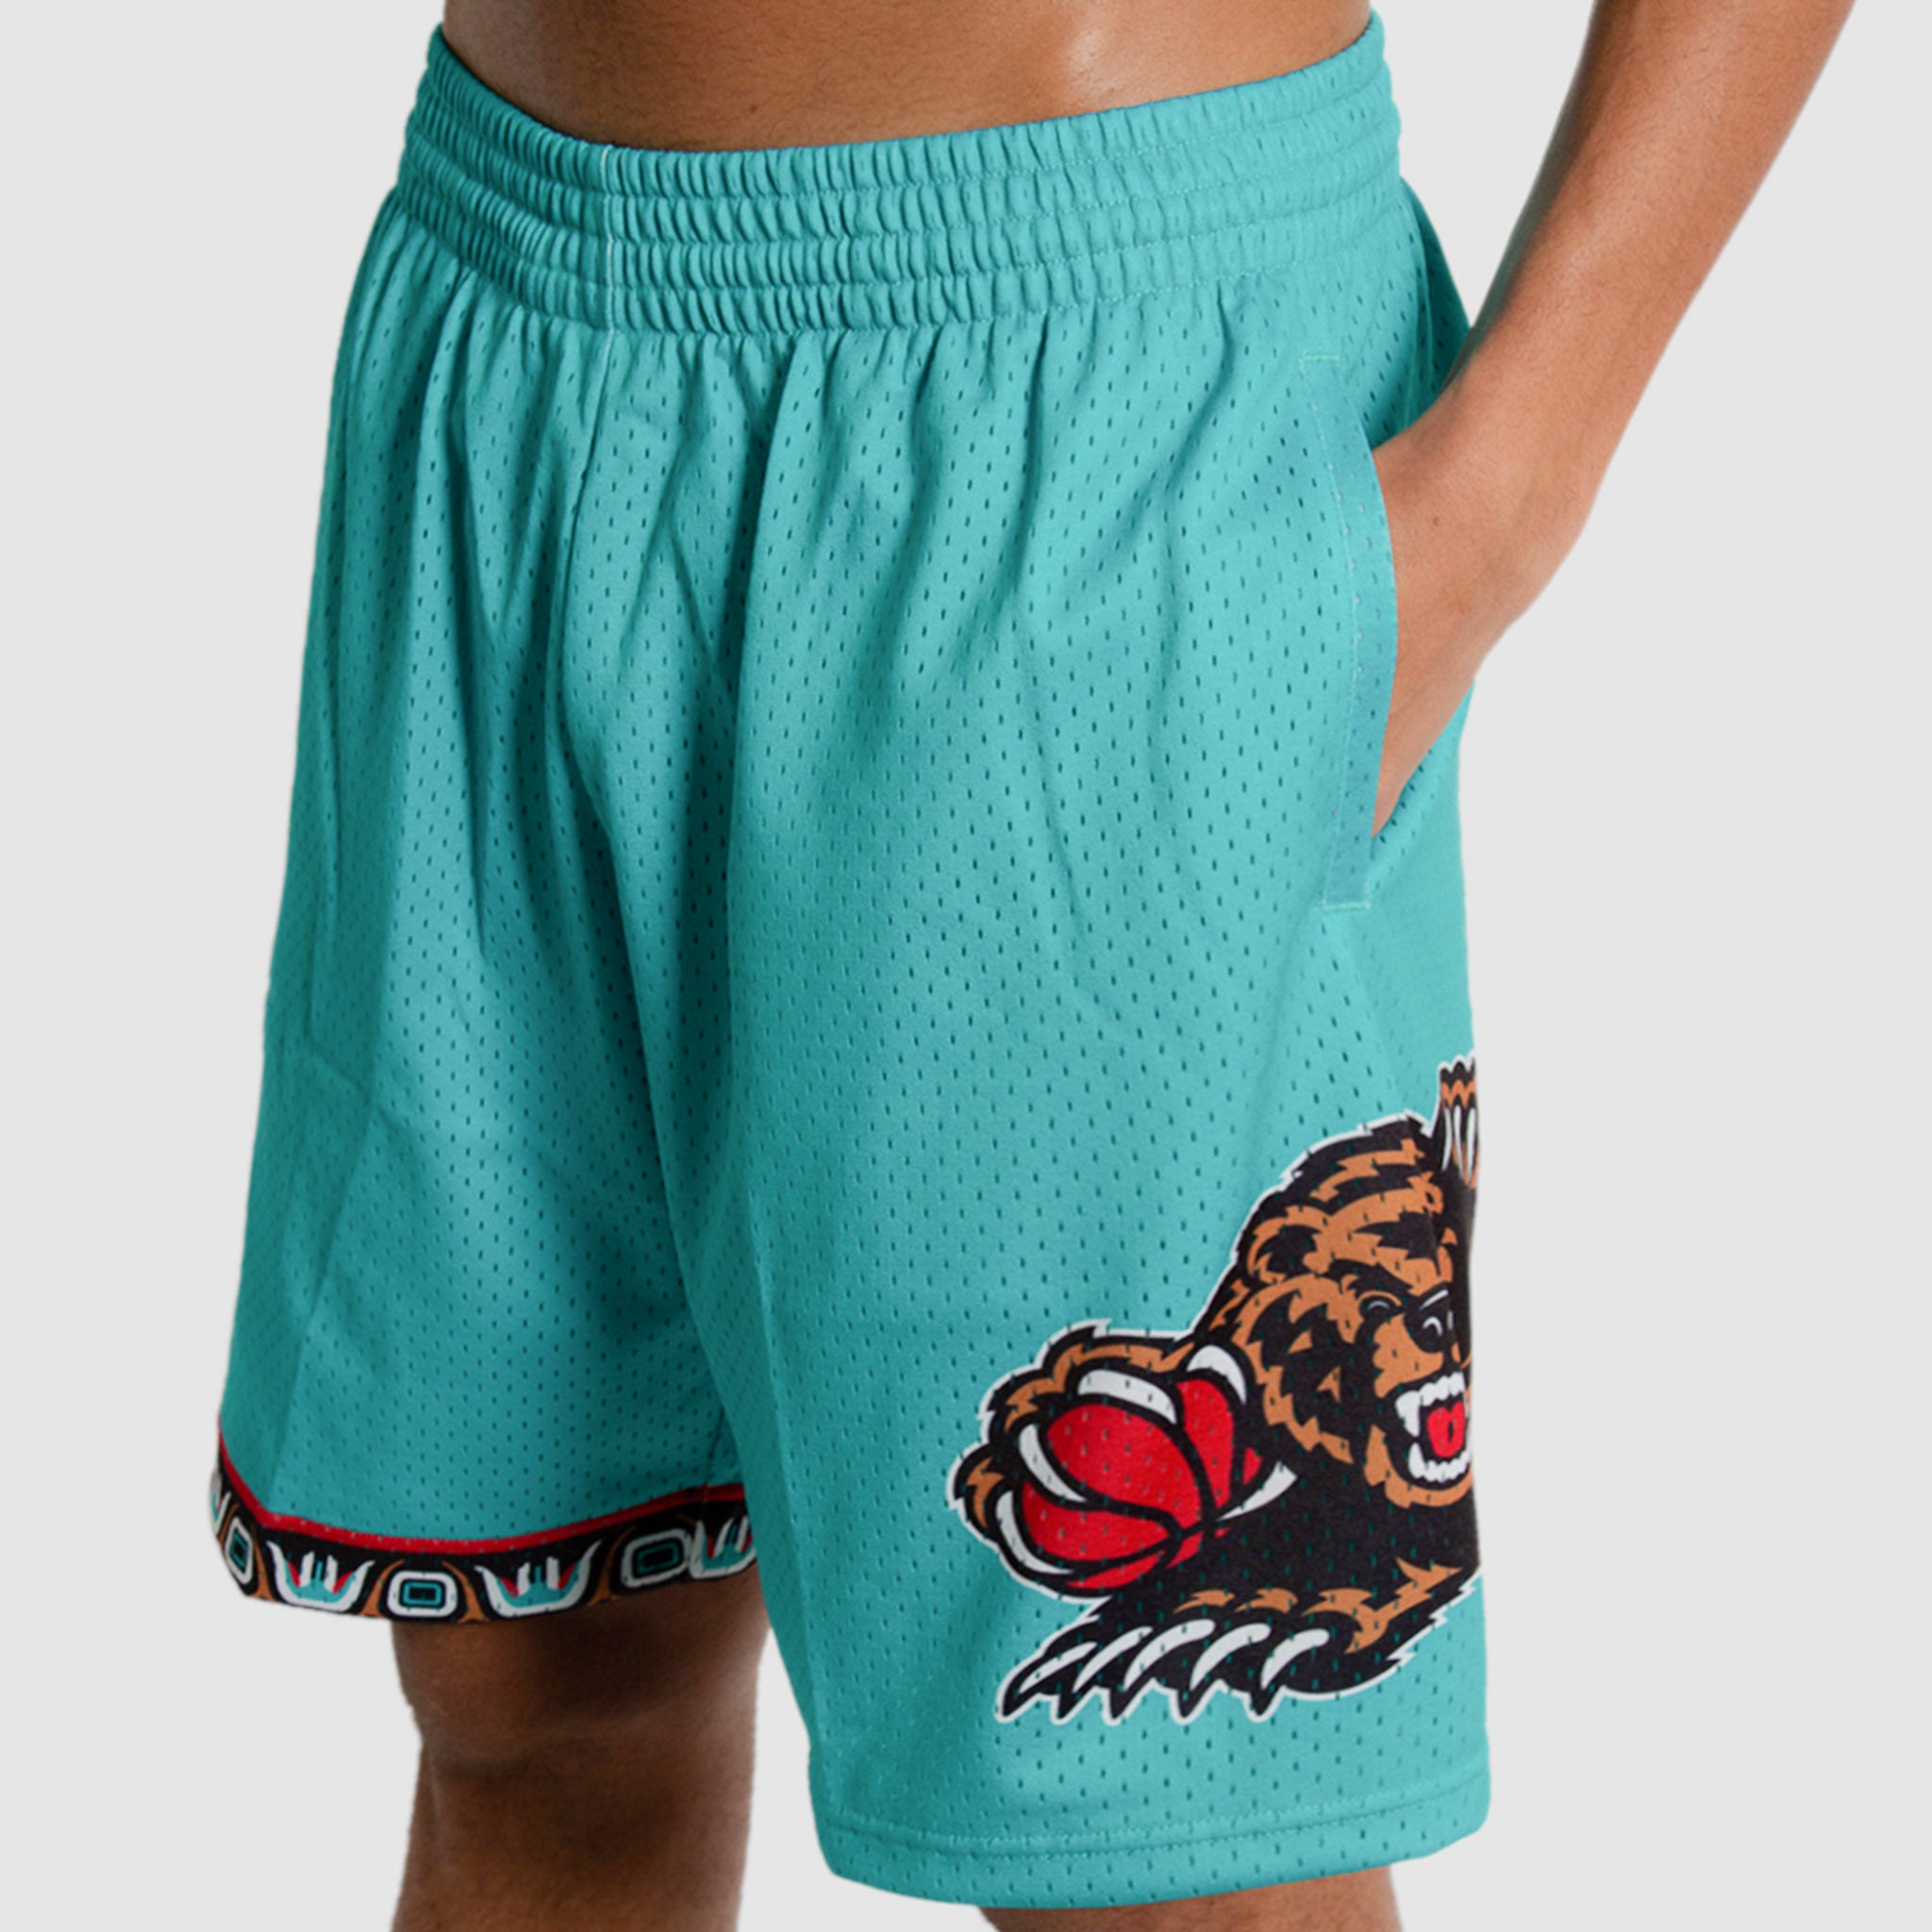 Mitchell & Ness authentic Nba Grizzlies basketball shorts, Ja